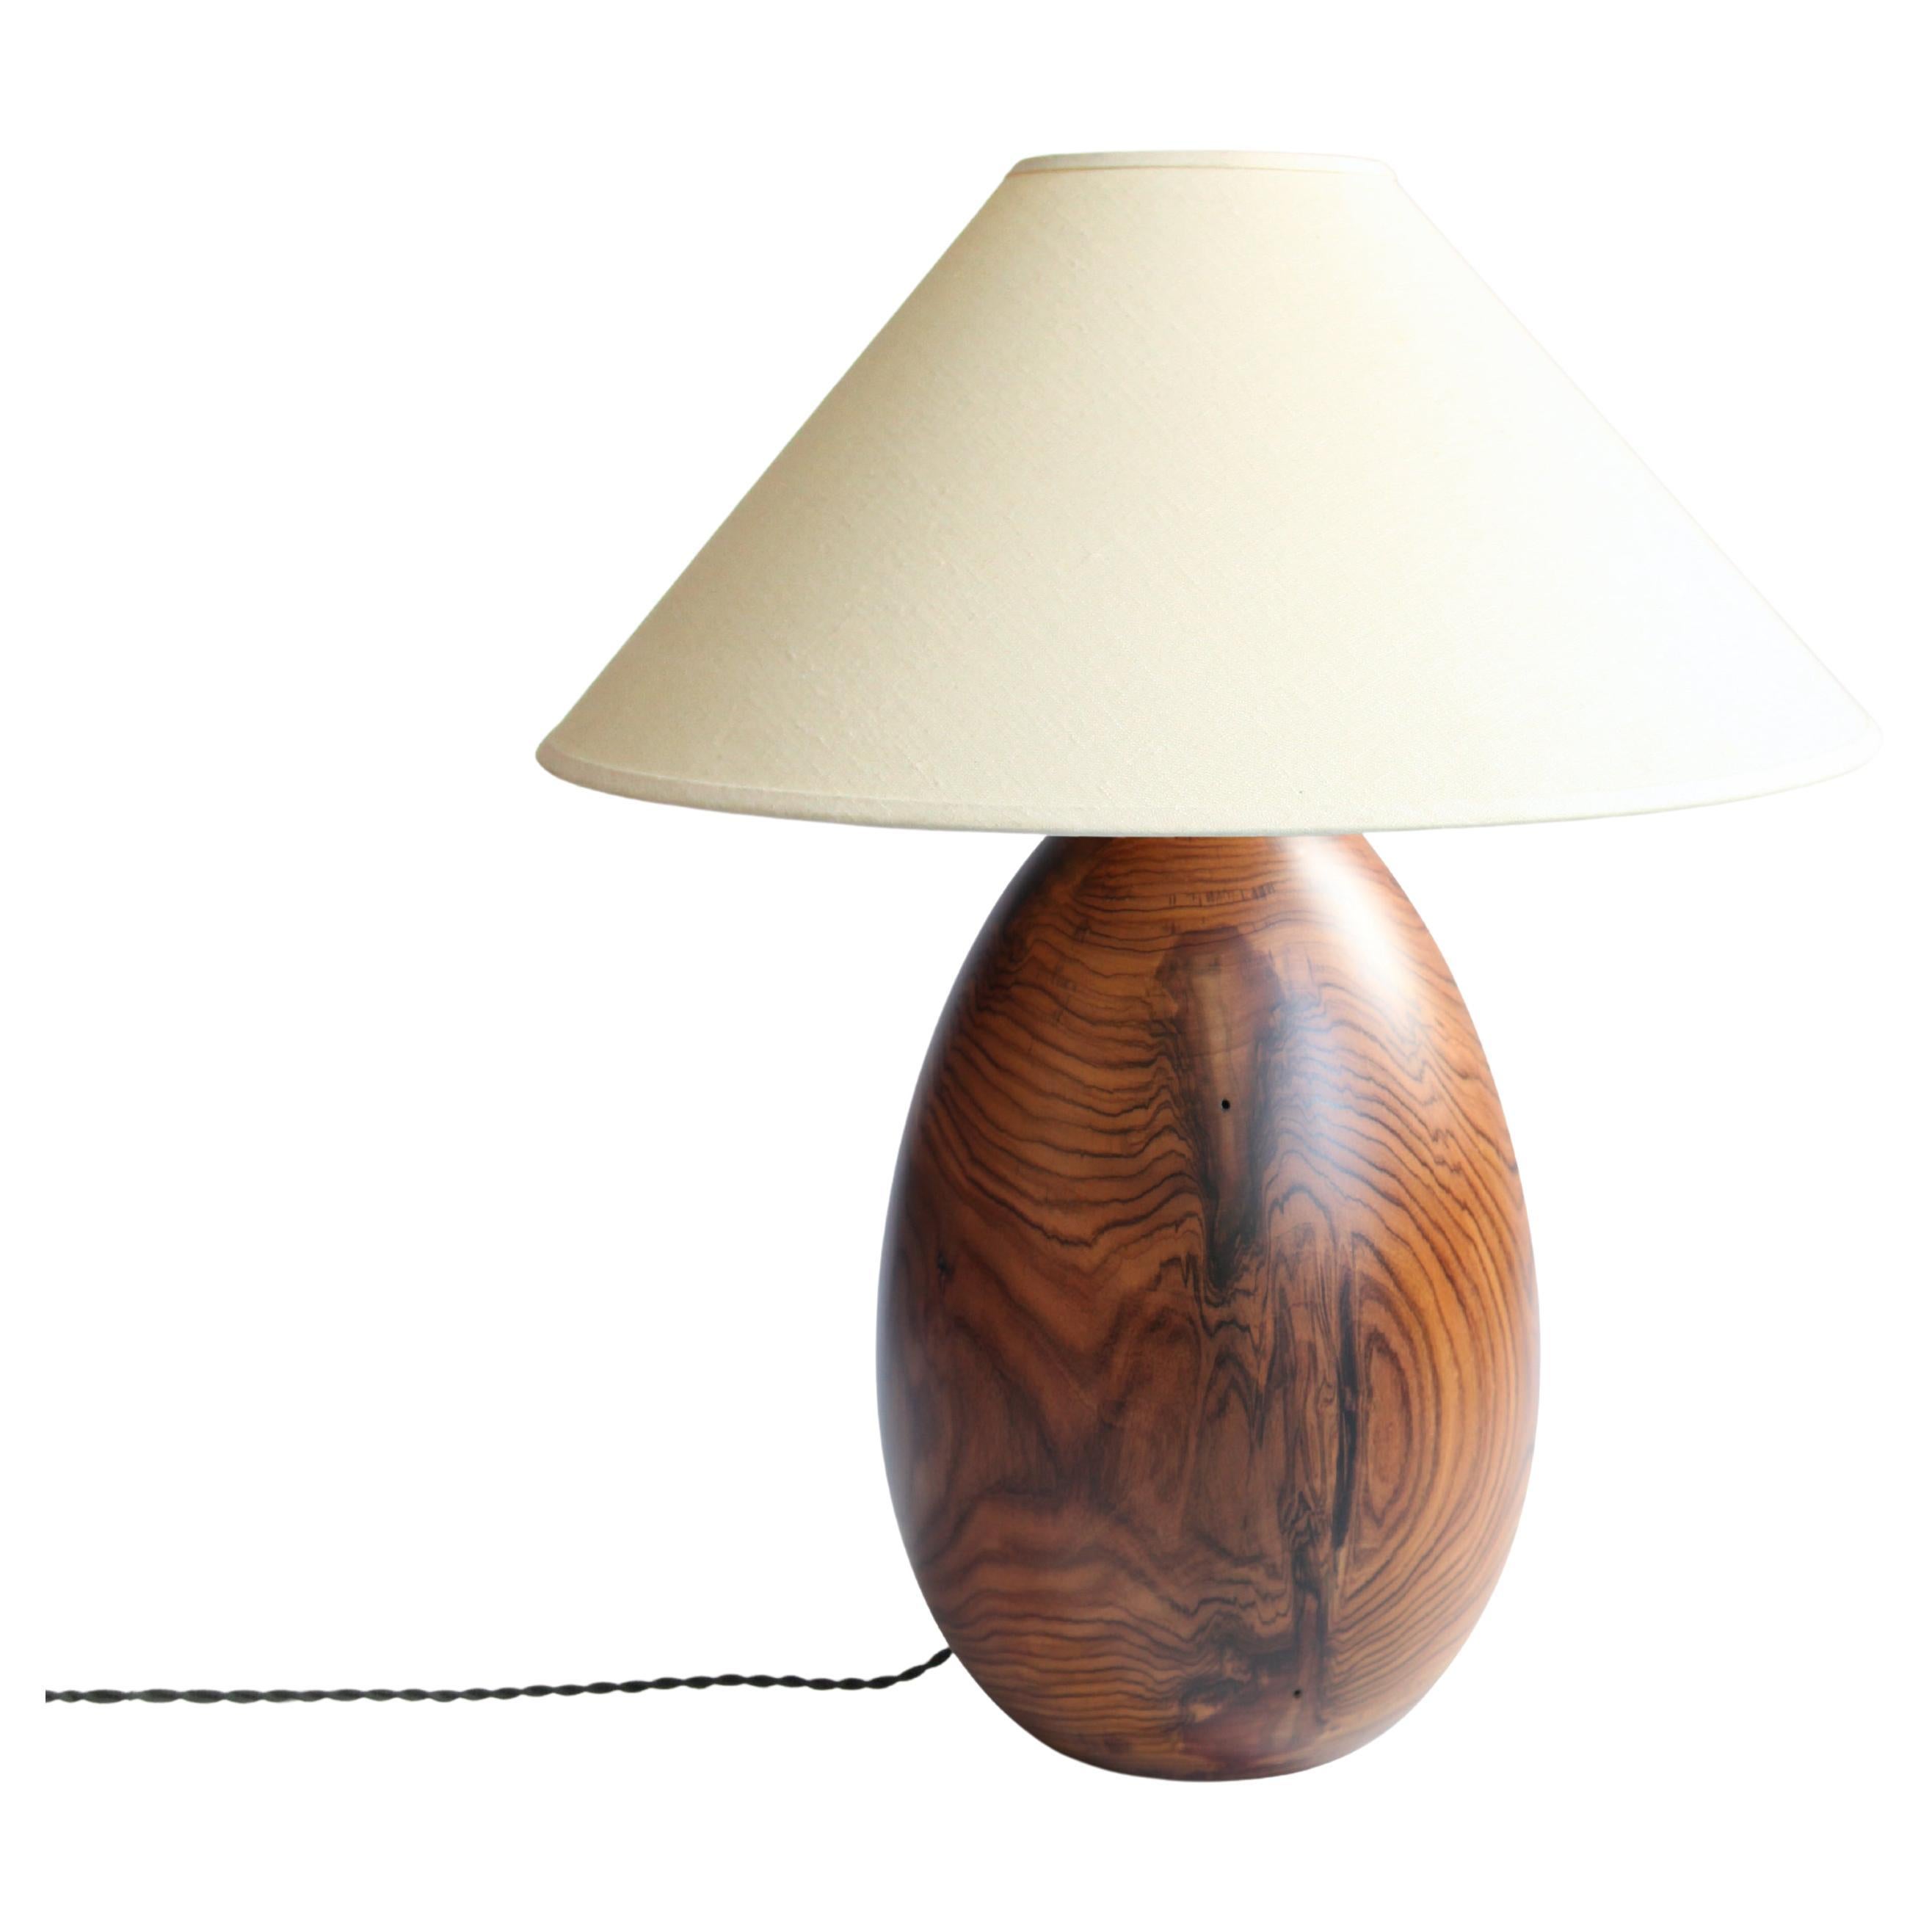 Tropical Hardwood Lamp + White Linen Shade, Medium Large, Árbol Collection, 42